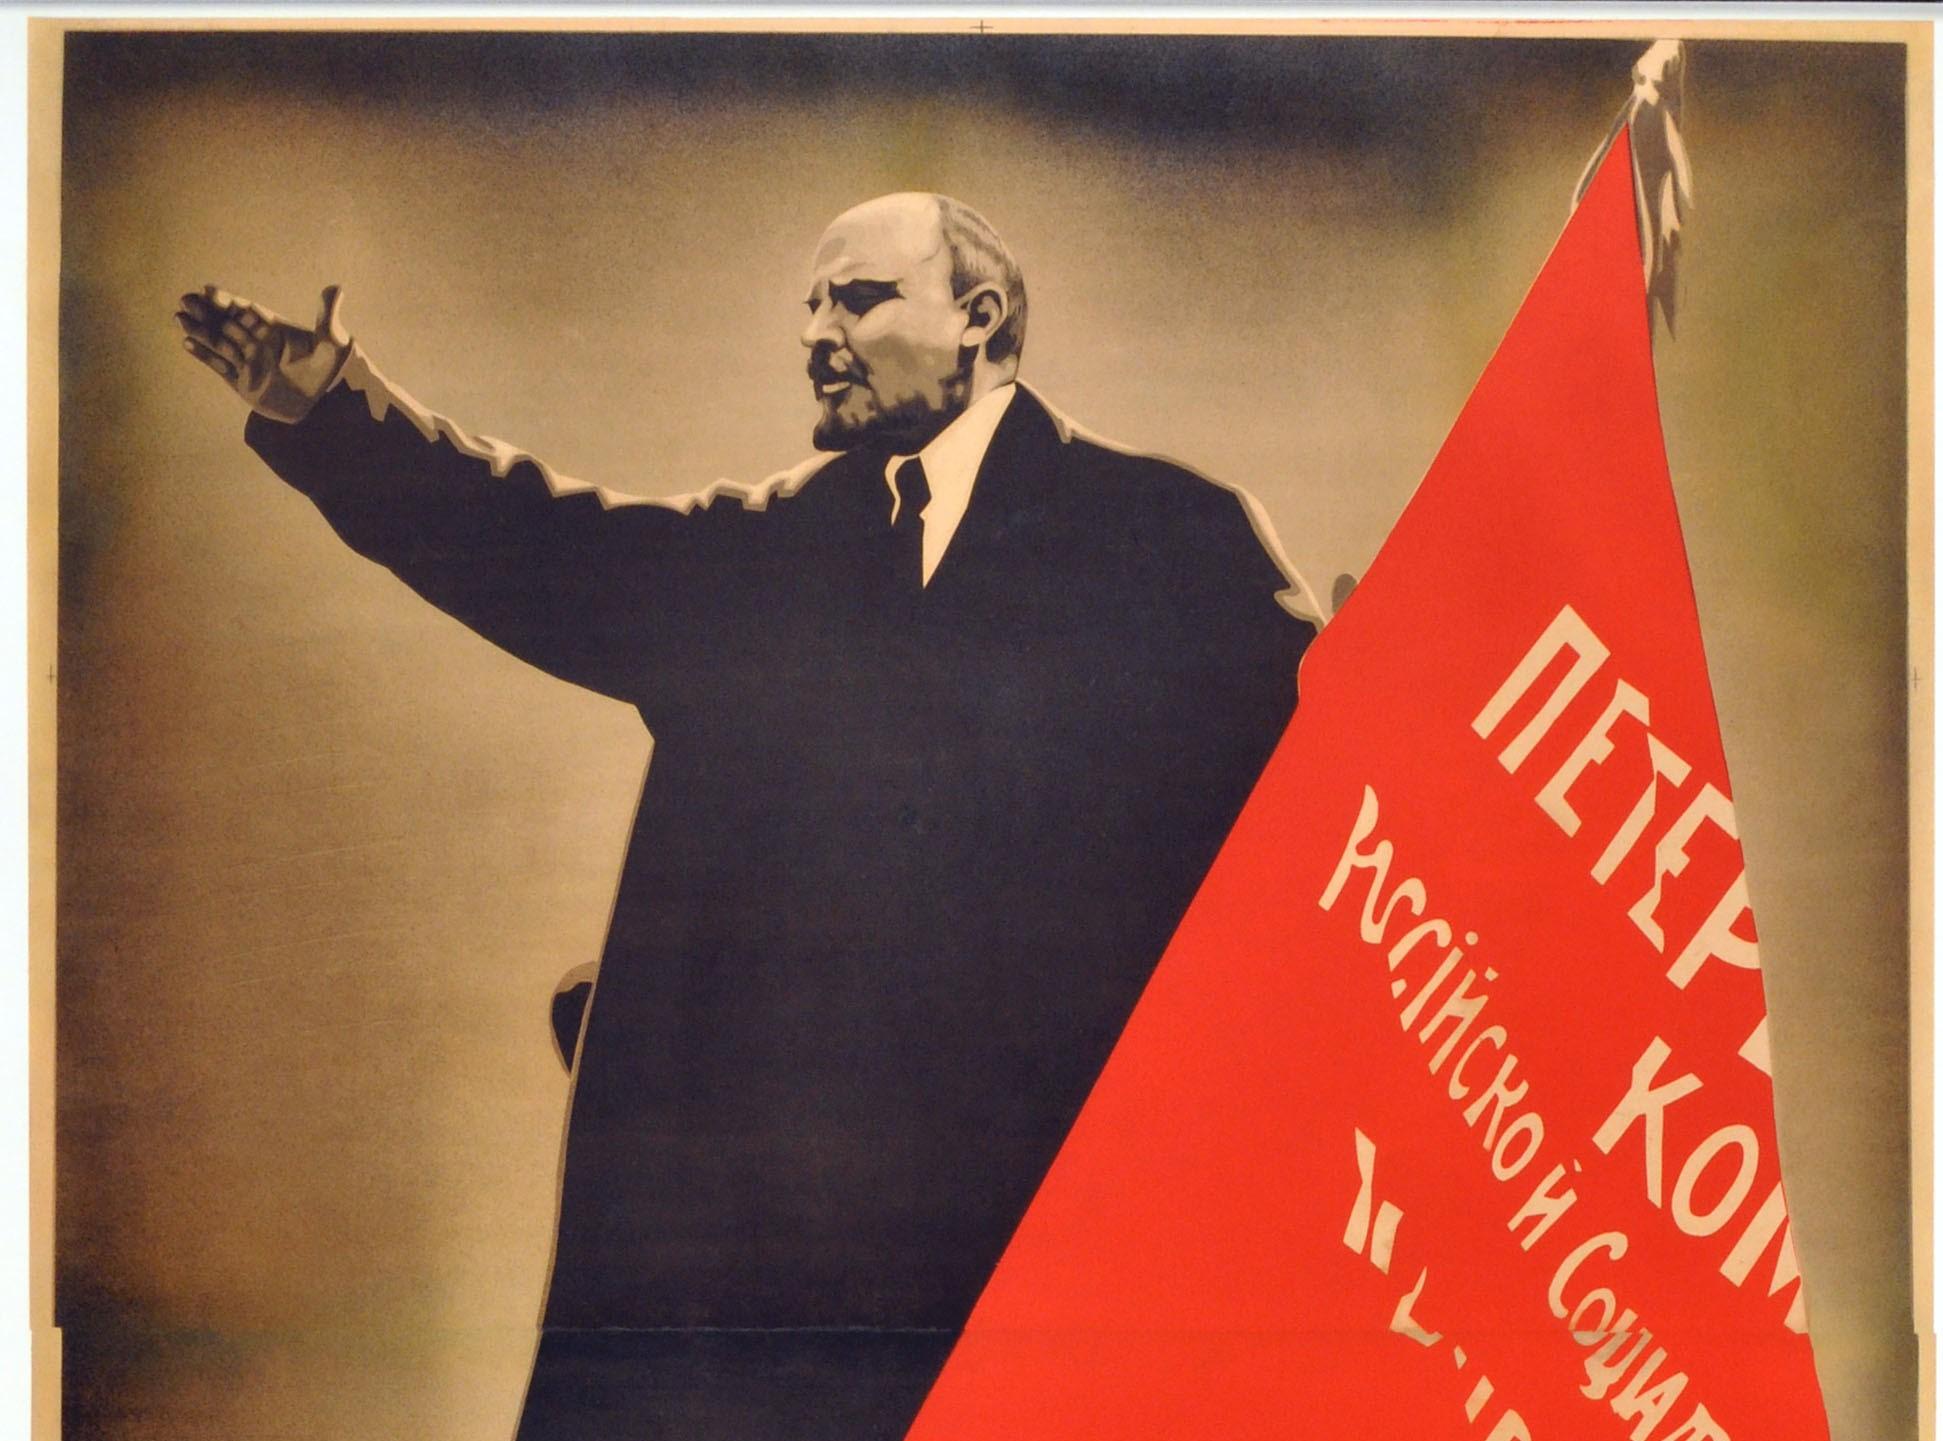 Rare Original Vintage Movie Poster By Ruklevsky For The Eisenstein Film October - Print by Unknown